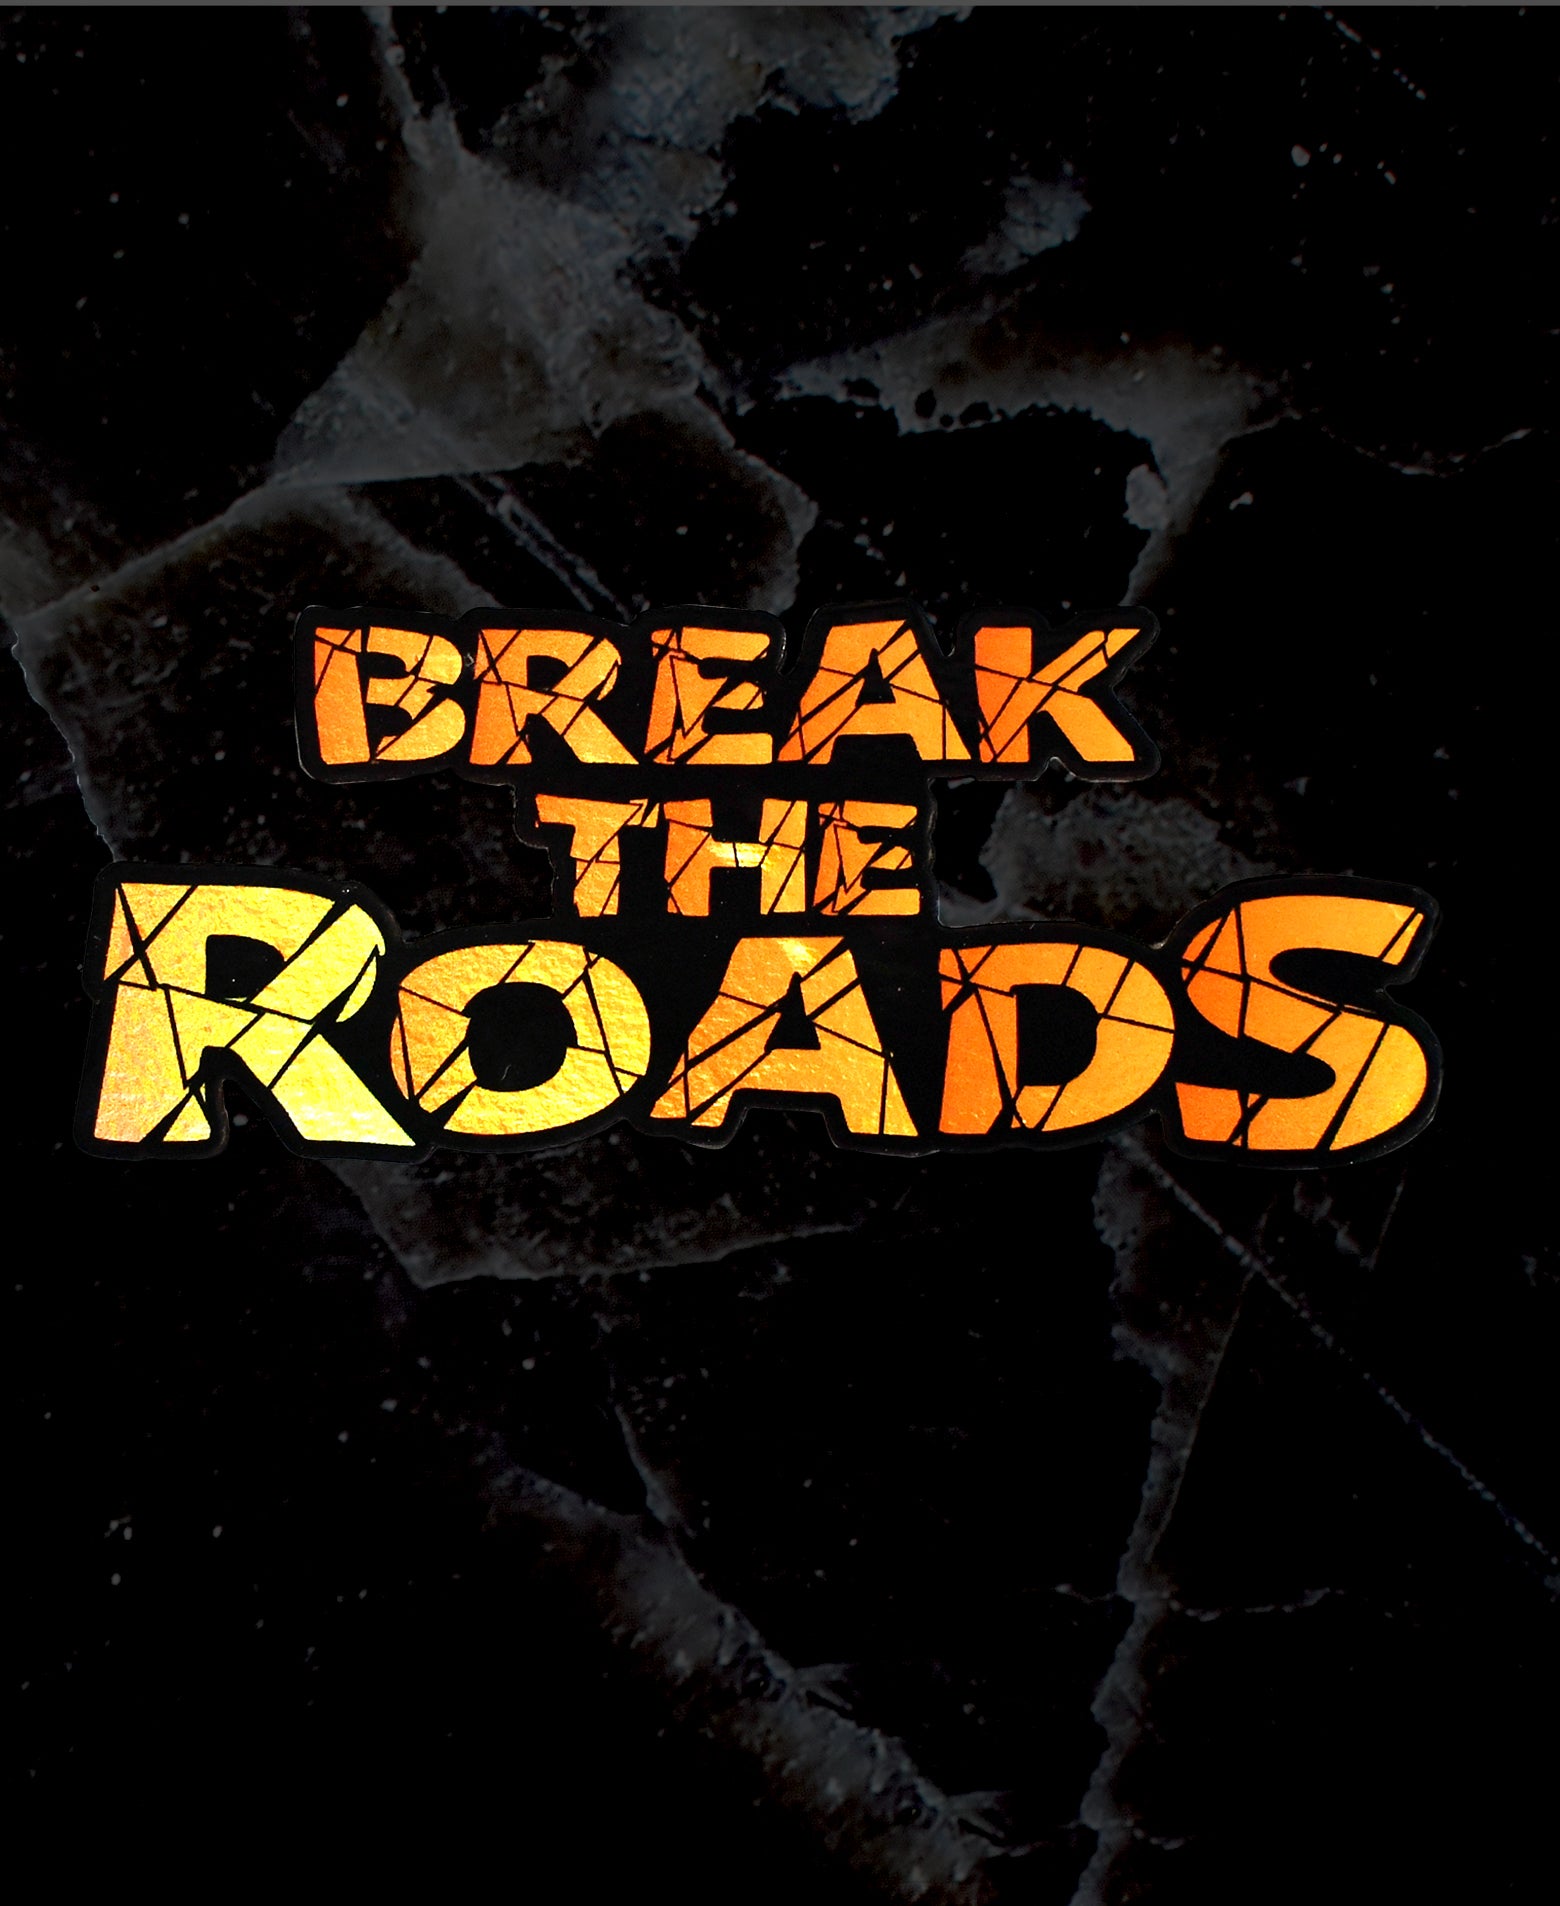 Break The Roads Holographic Sticker